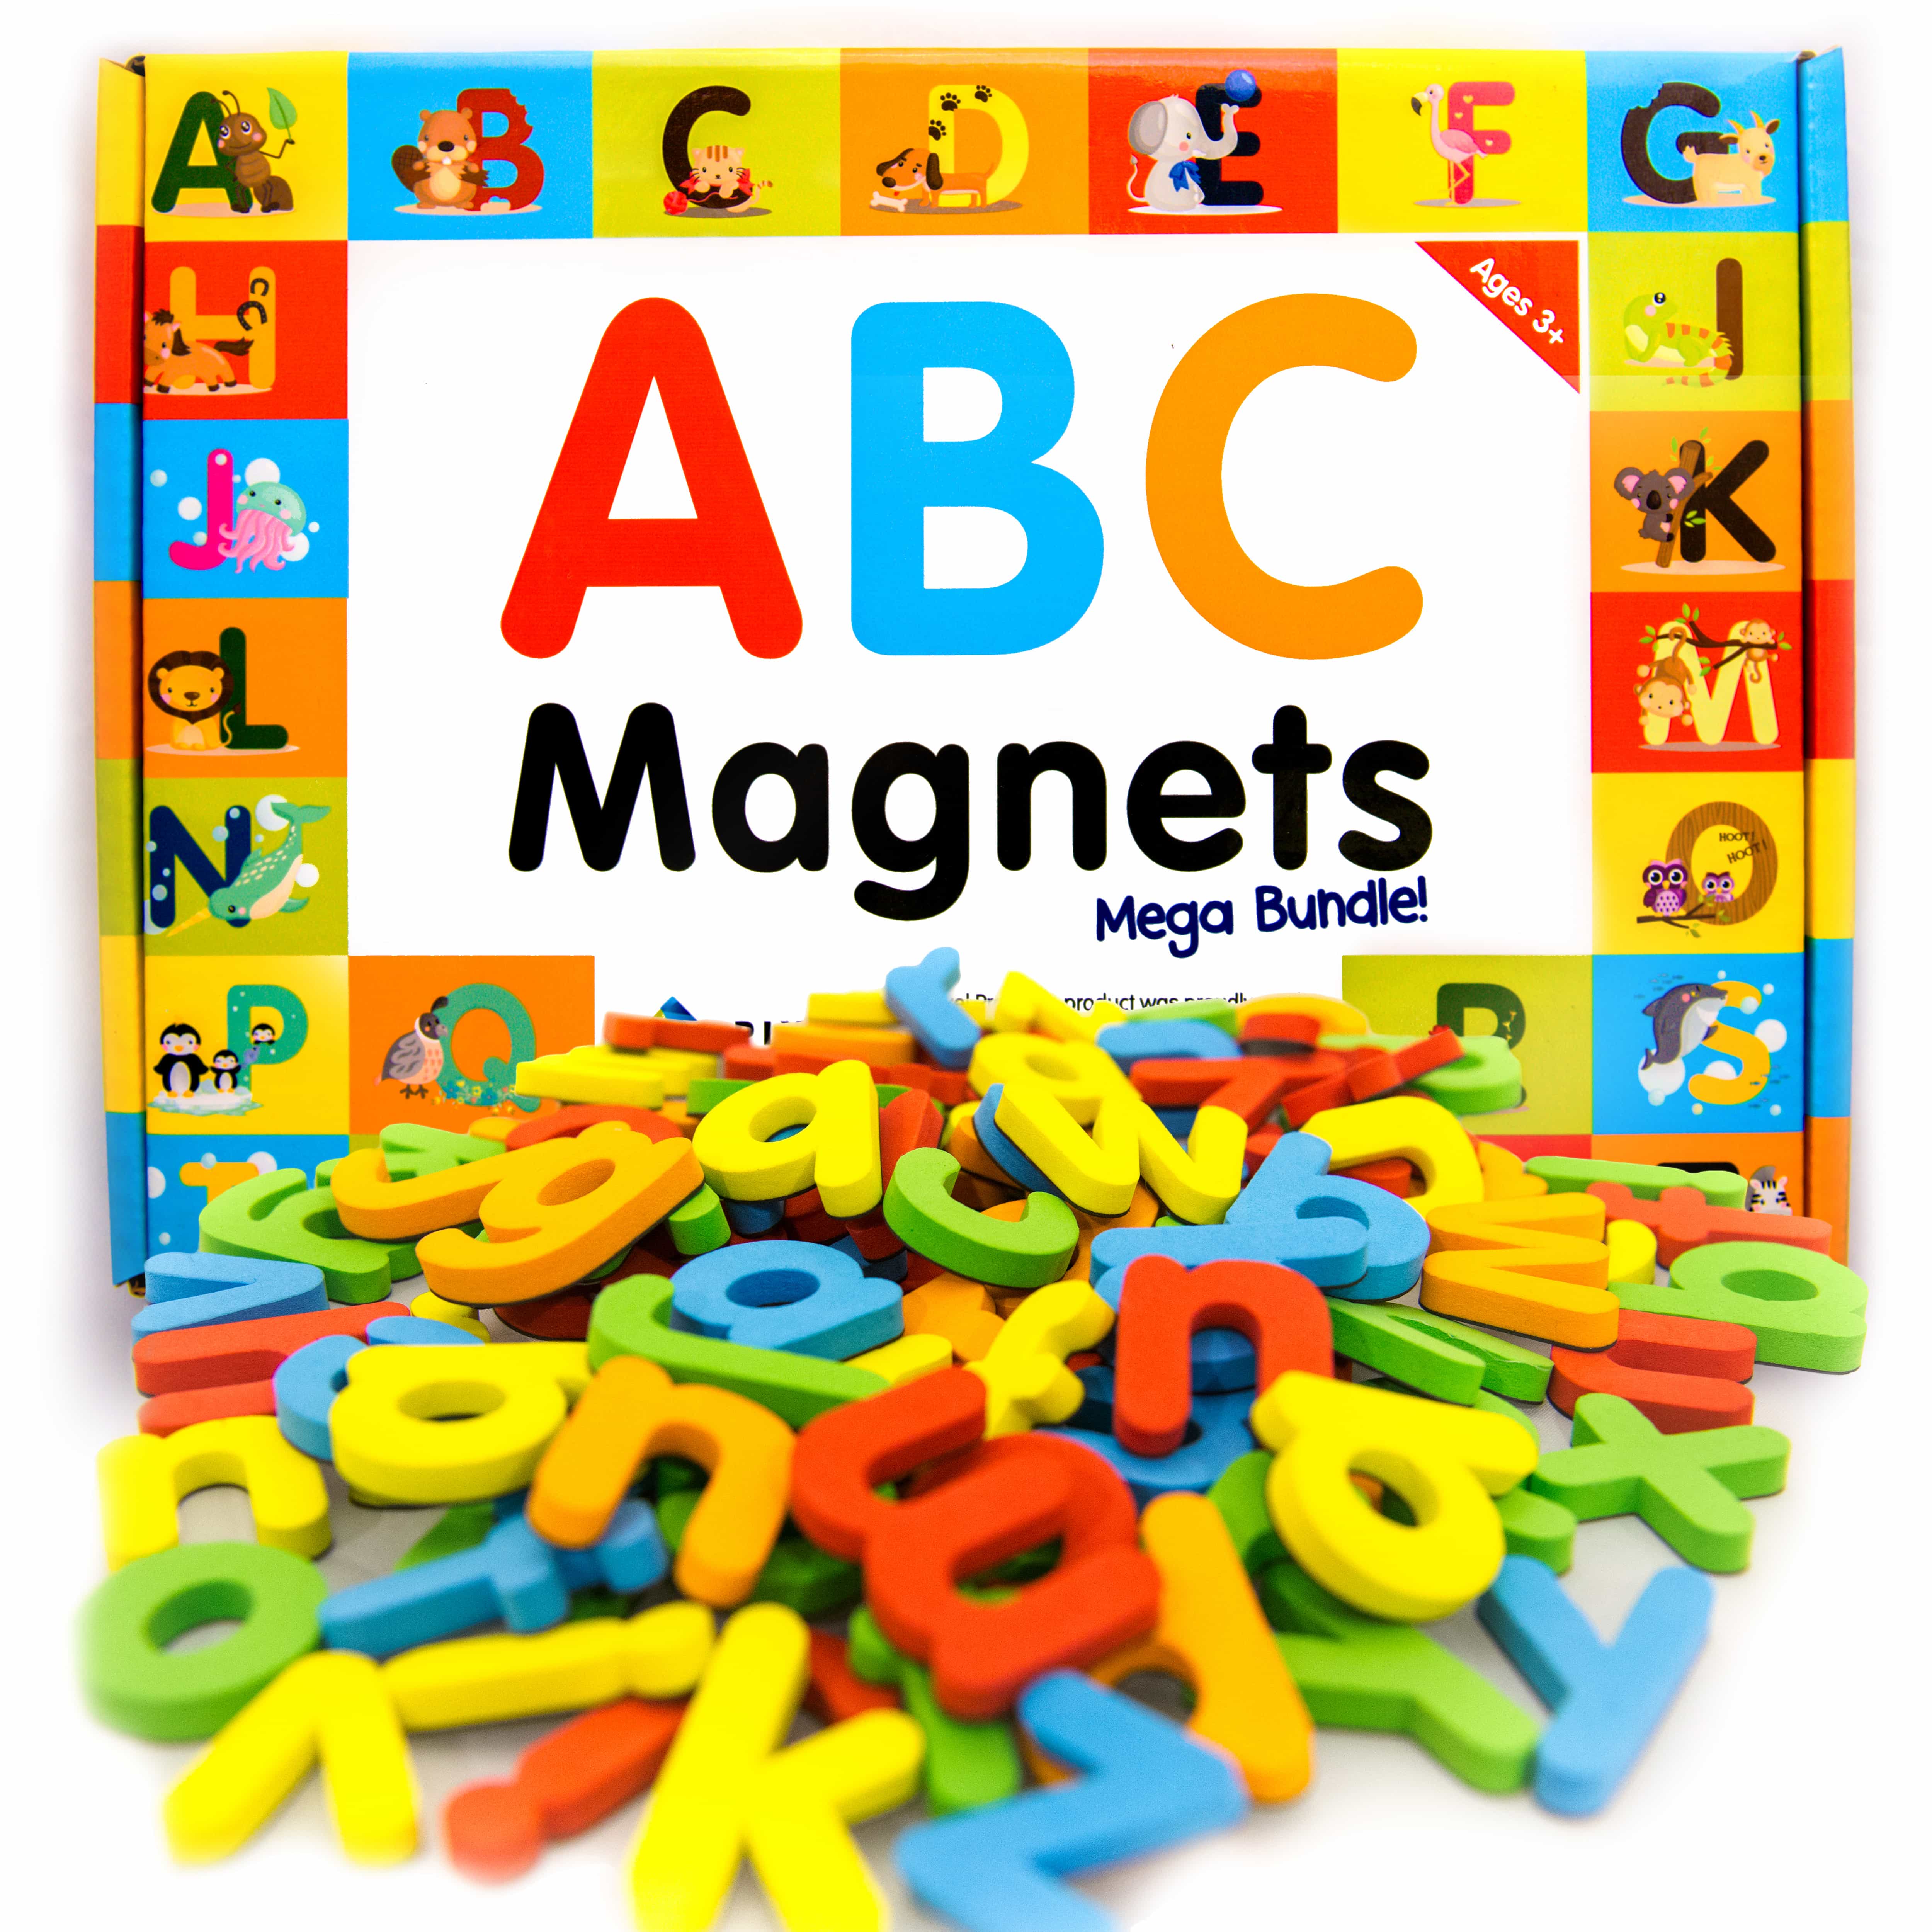 ABc Magnets